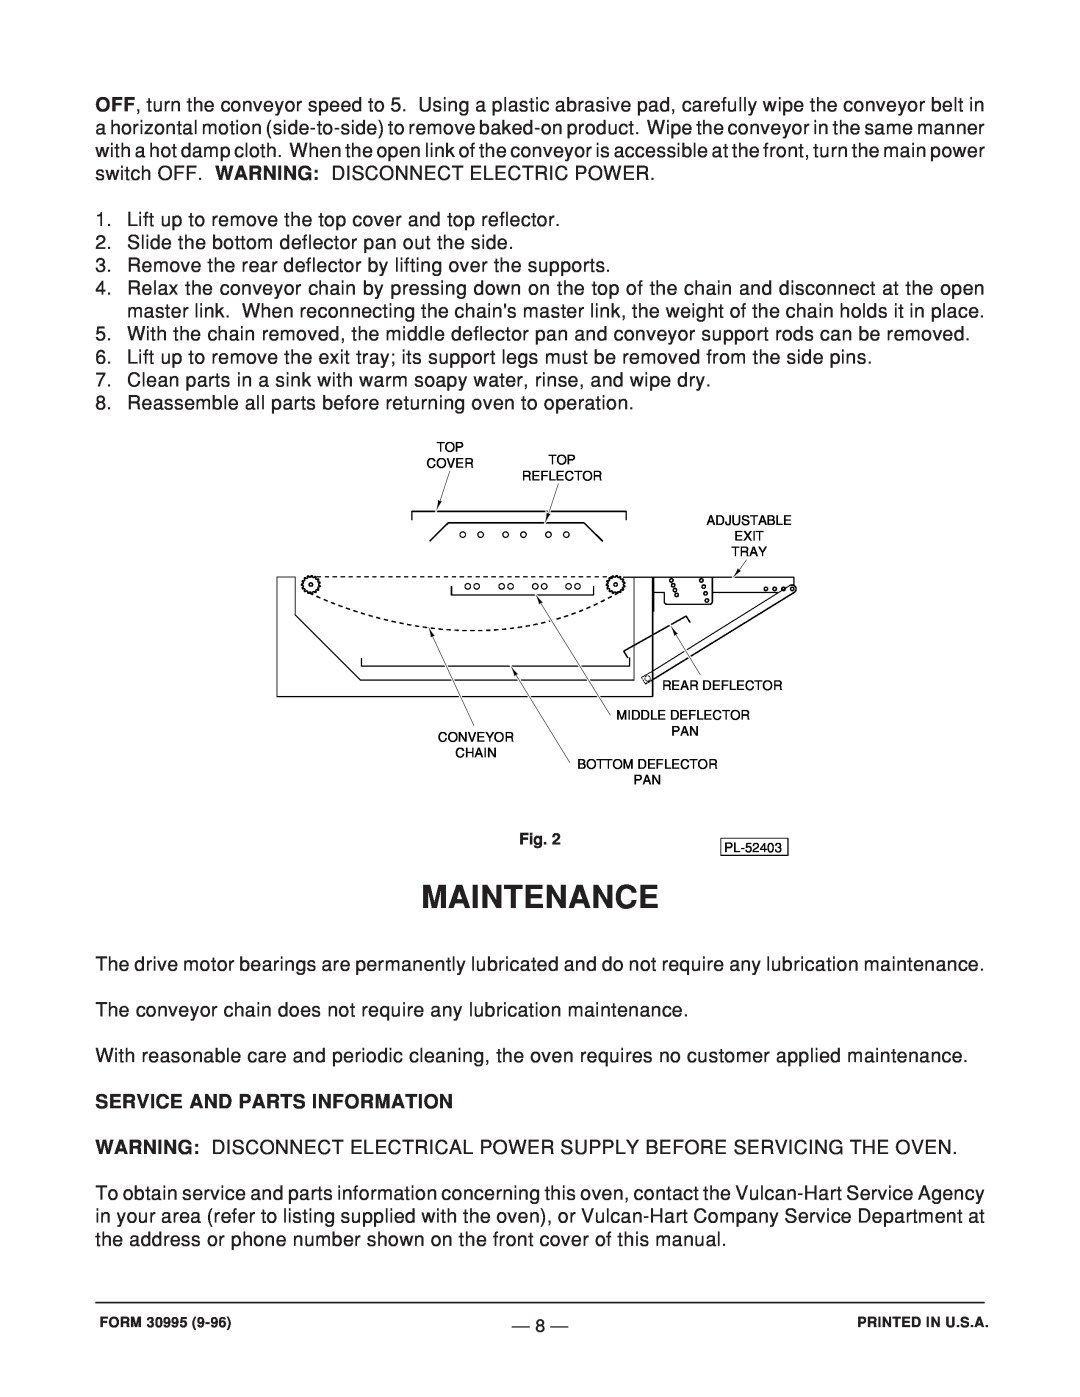 Vulcan-Hart ML-52497, CB1824E operation manual Maintenance, Service And Parts Information 